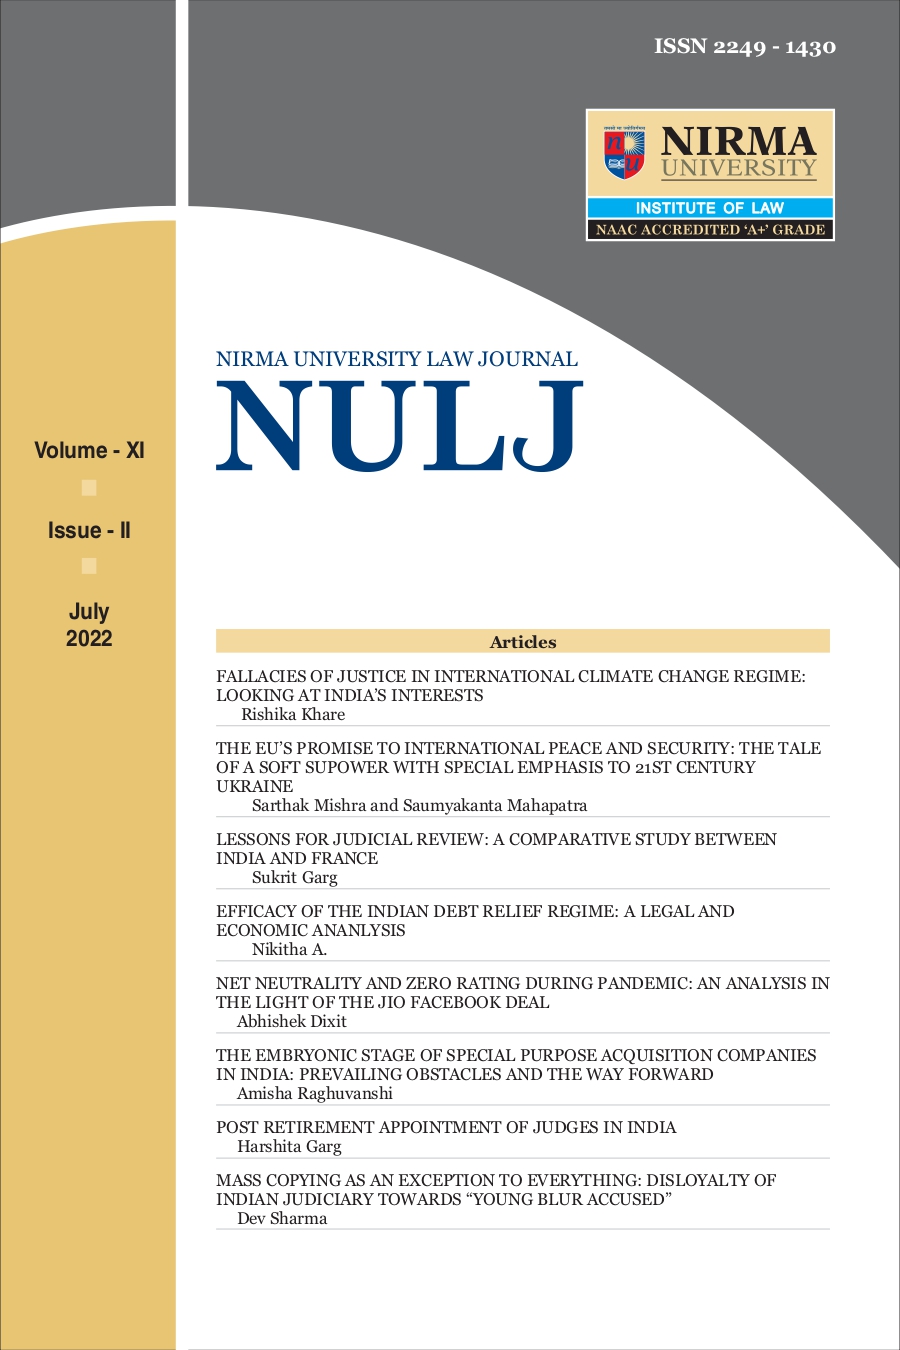 NULJ Volume XI, Issue II (July 2022)